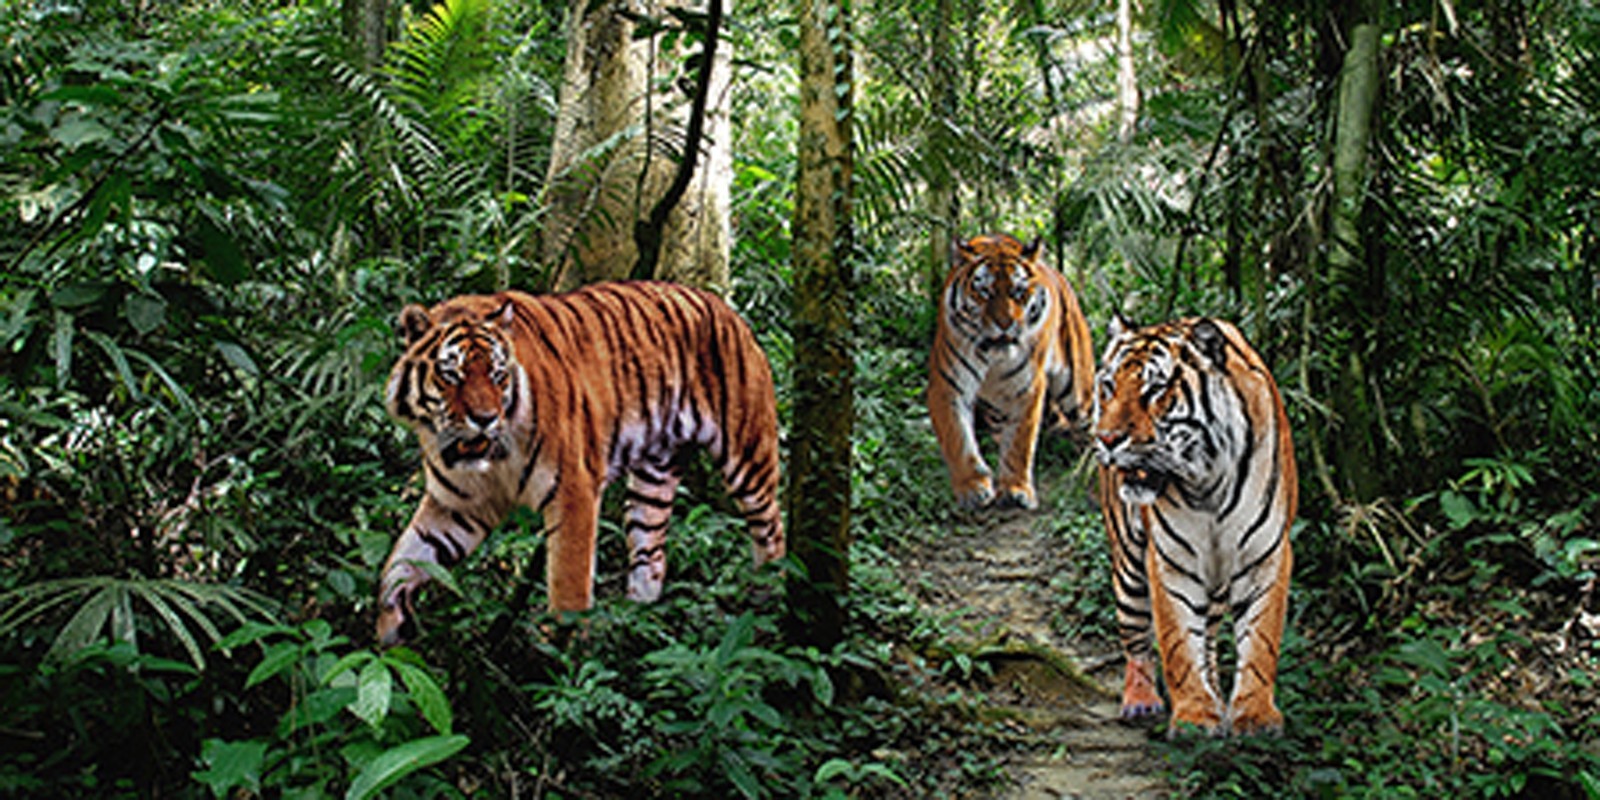 Pangea Images - Bengal Tigers (detail)